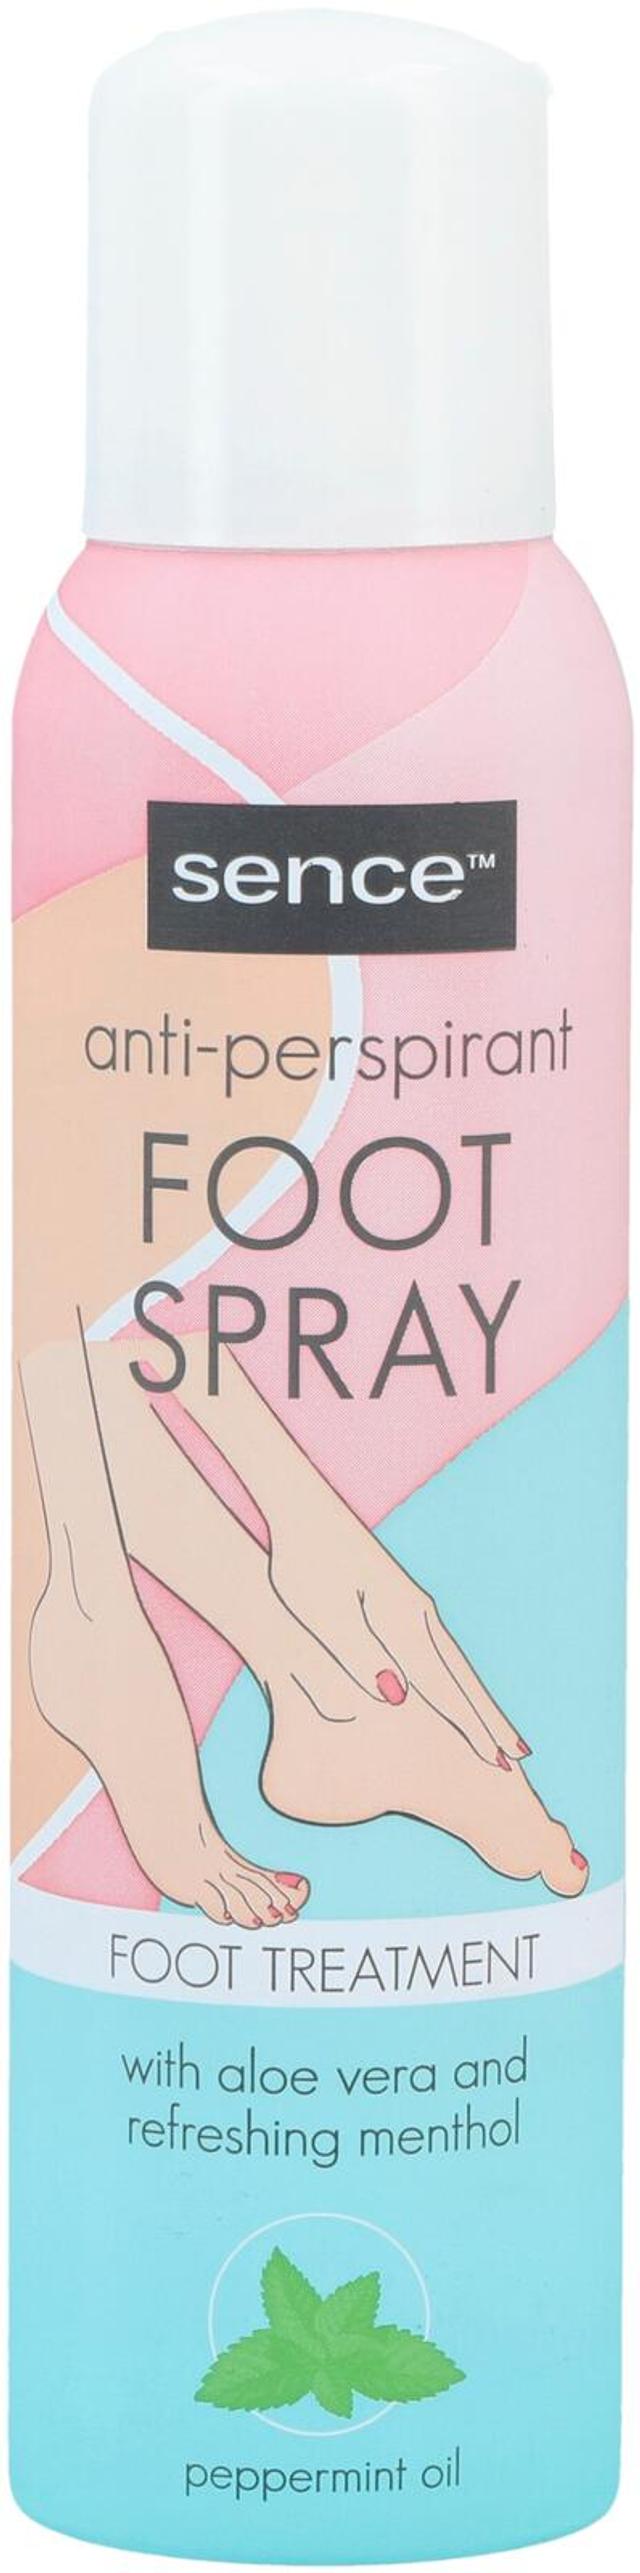 Sence Foot Spray anti-perspirant 150ml